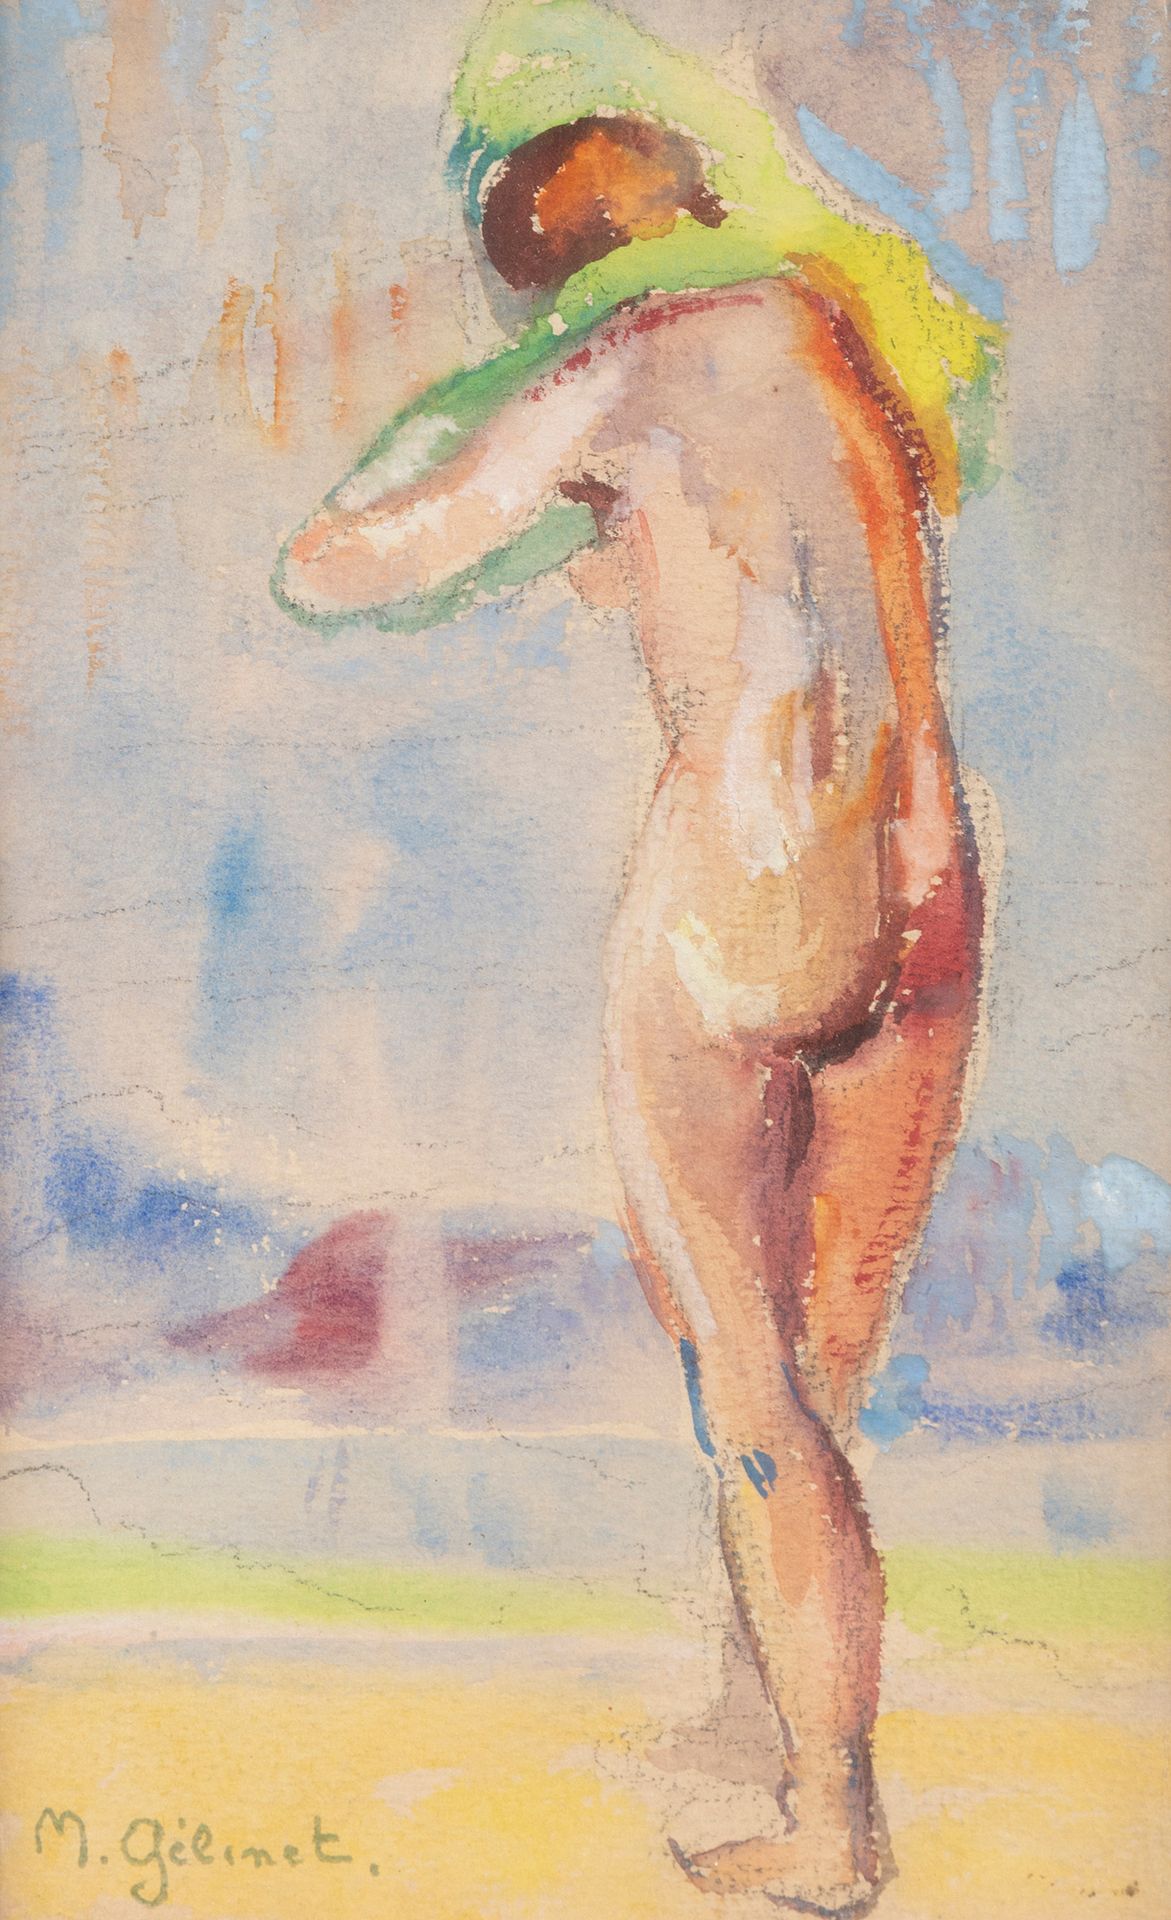 Null 马塞尔-格利内(1895-1984)

沐浴者

纸上水粉画

左下方有签名

19 x 11.5 cm 正在观看